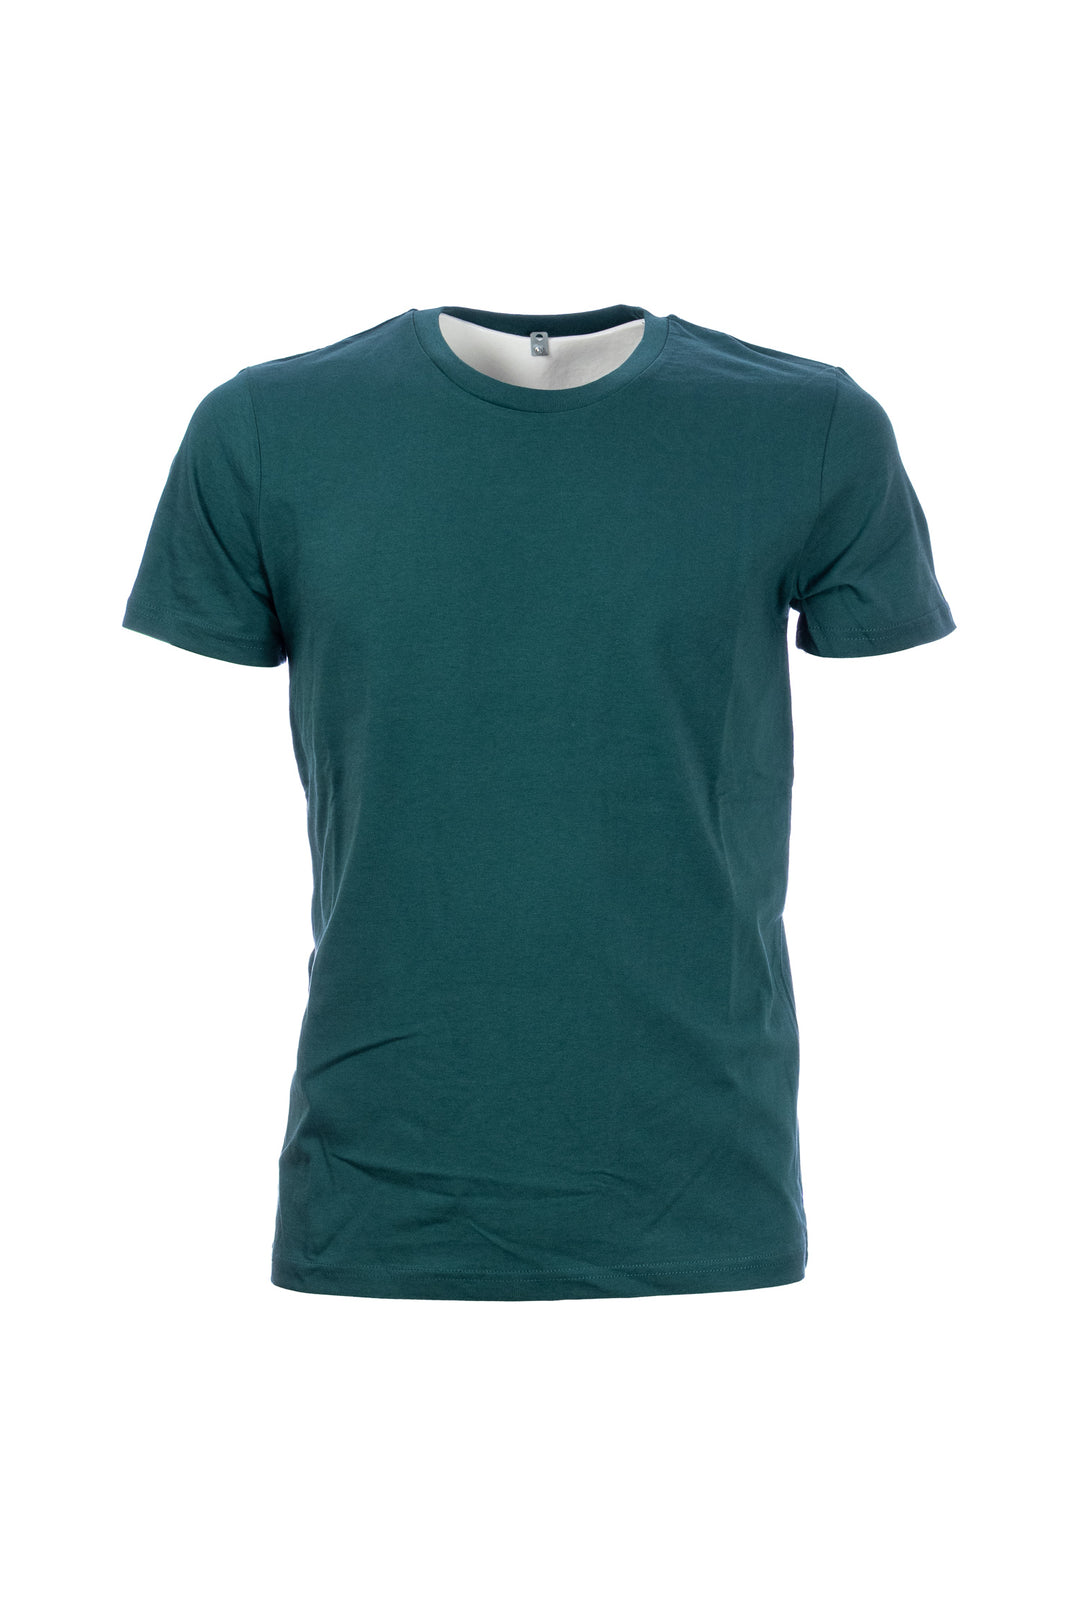 Mancinelli 1954 T-shirt verde scuro tinta unita in cotone - Mancinelli 1954